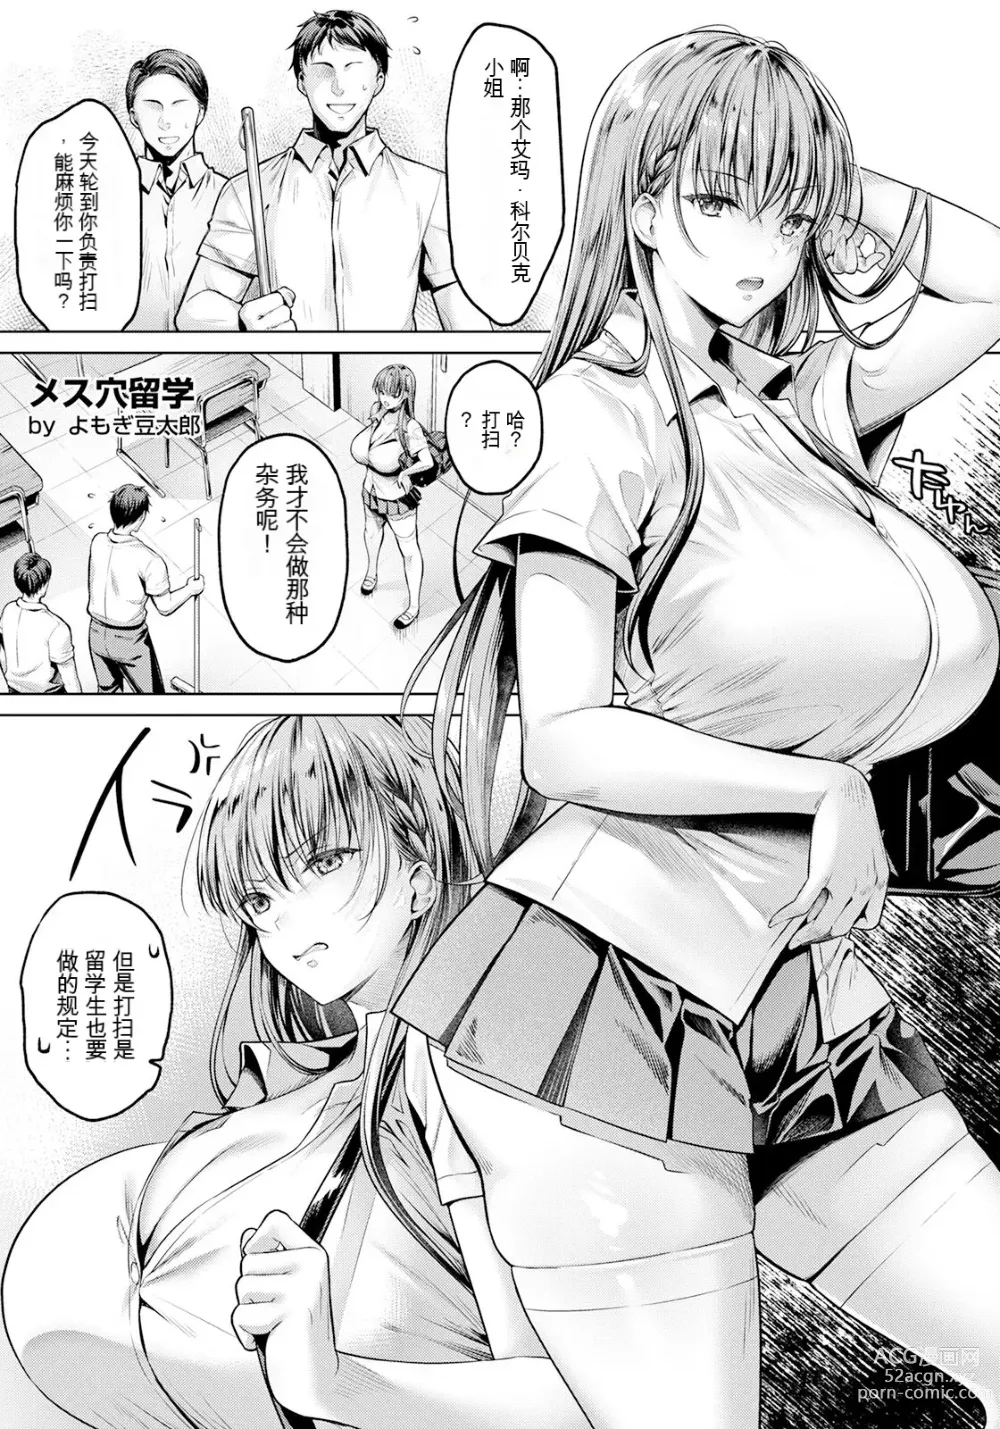 Page 6 of manga Mesuana Ryuugaku